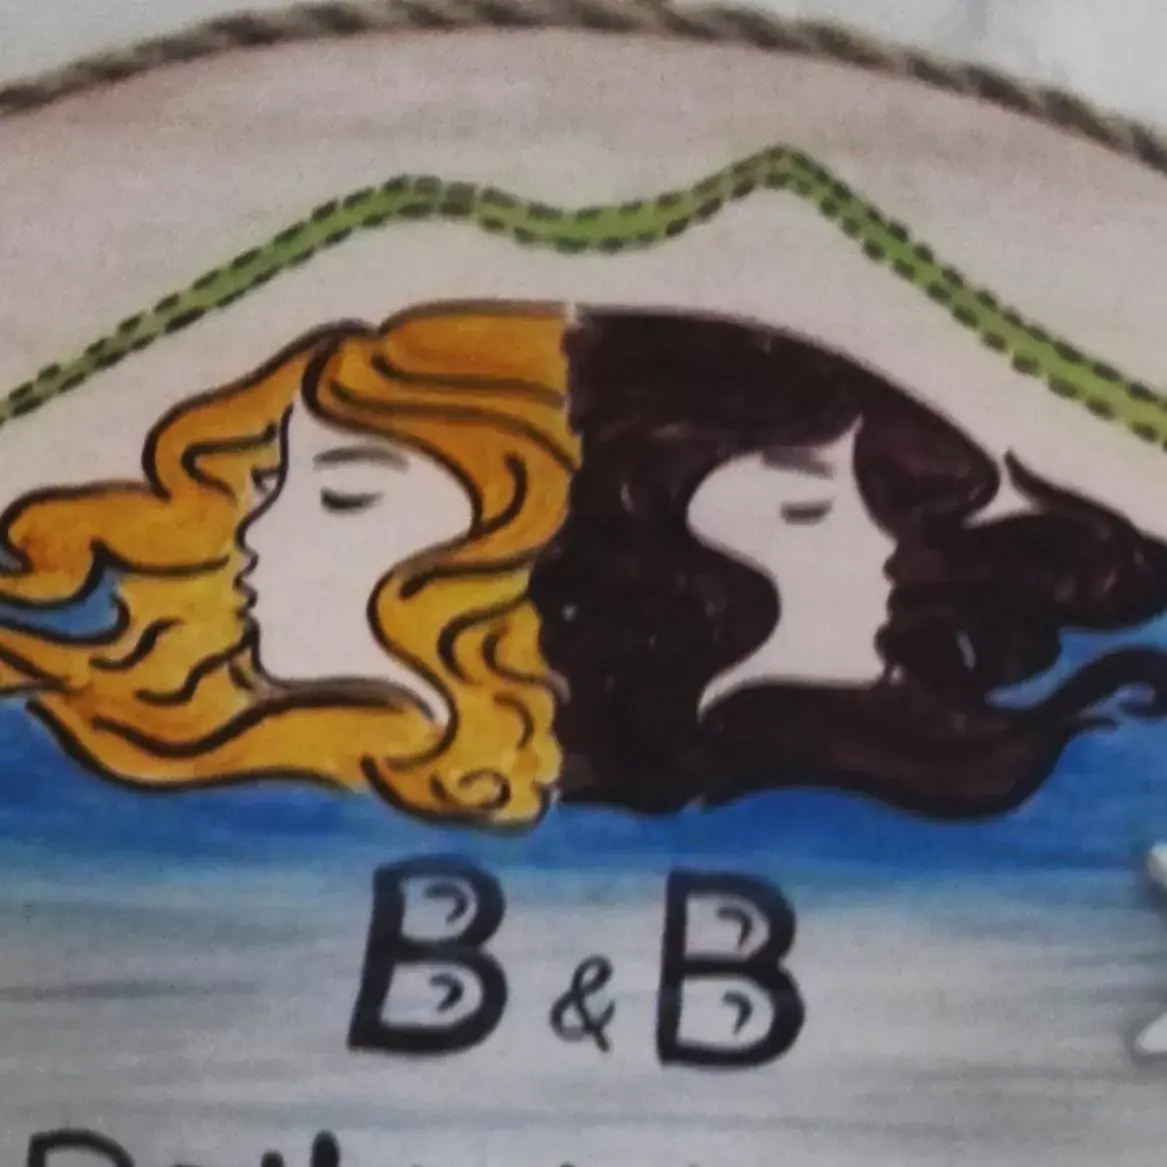 Property logo or sign in Vesuviane 'E Belle 'Mbriane B&B